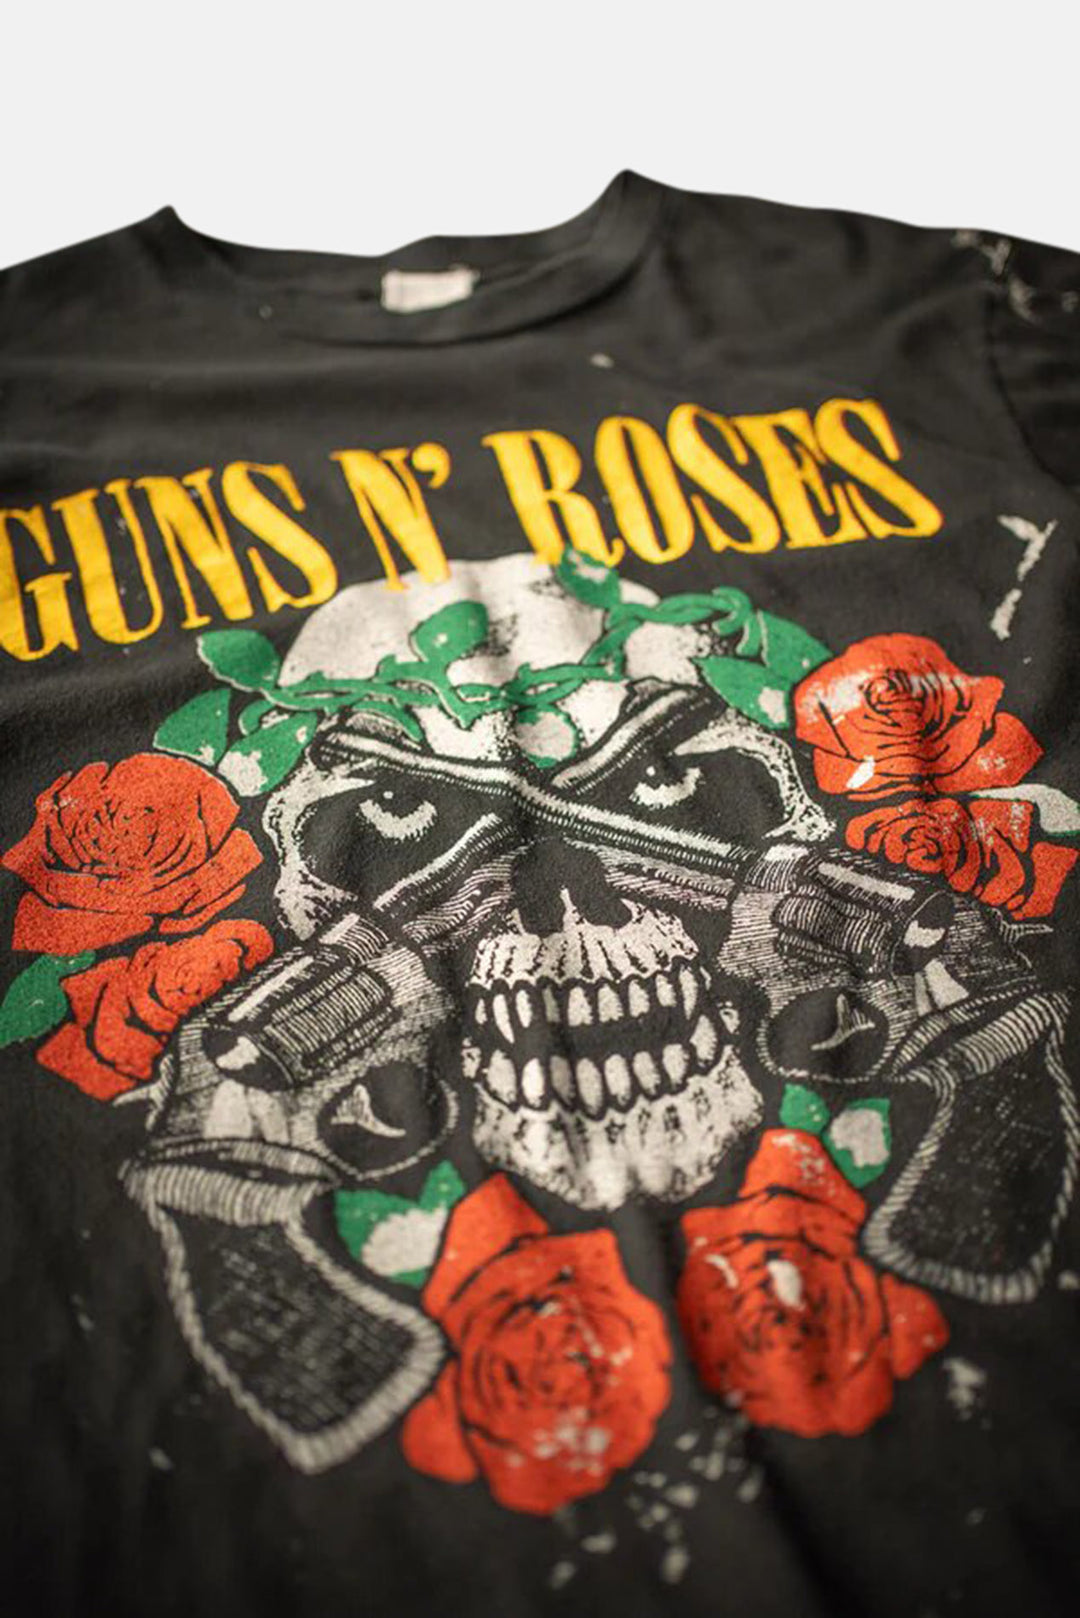 Guns N' Roses N' Long Sleeve Coal Pigment